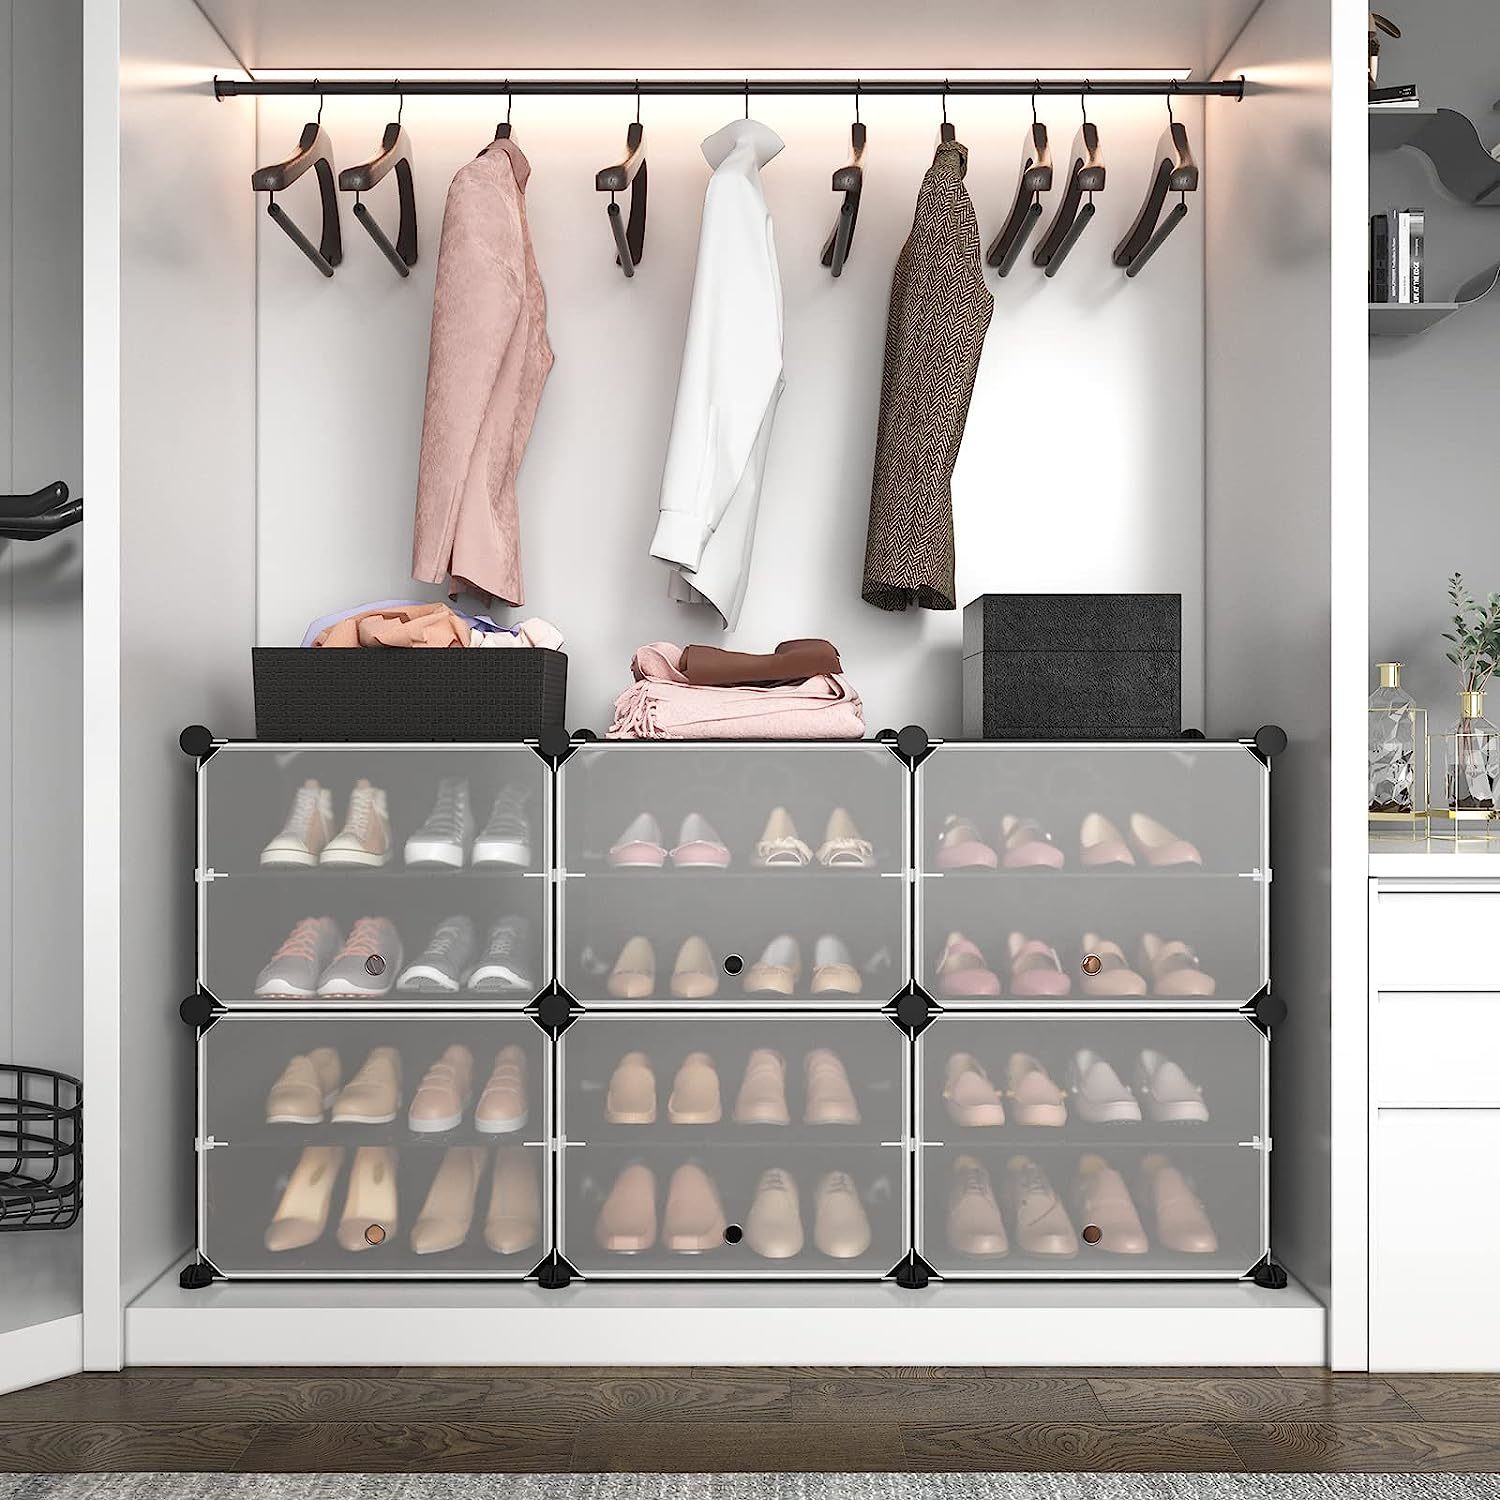 rirpuae 9-tier shoe rack storage organizer, shoe shelf for holds 50